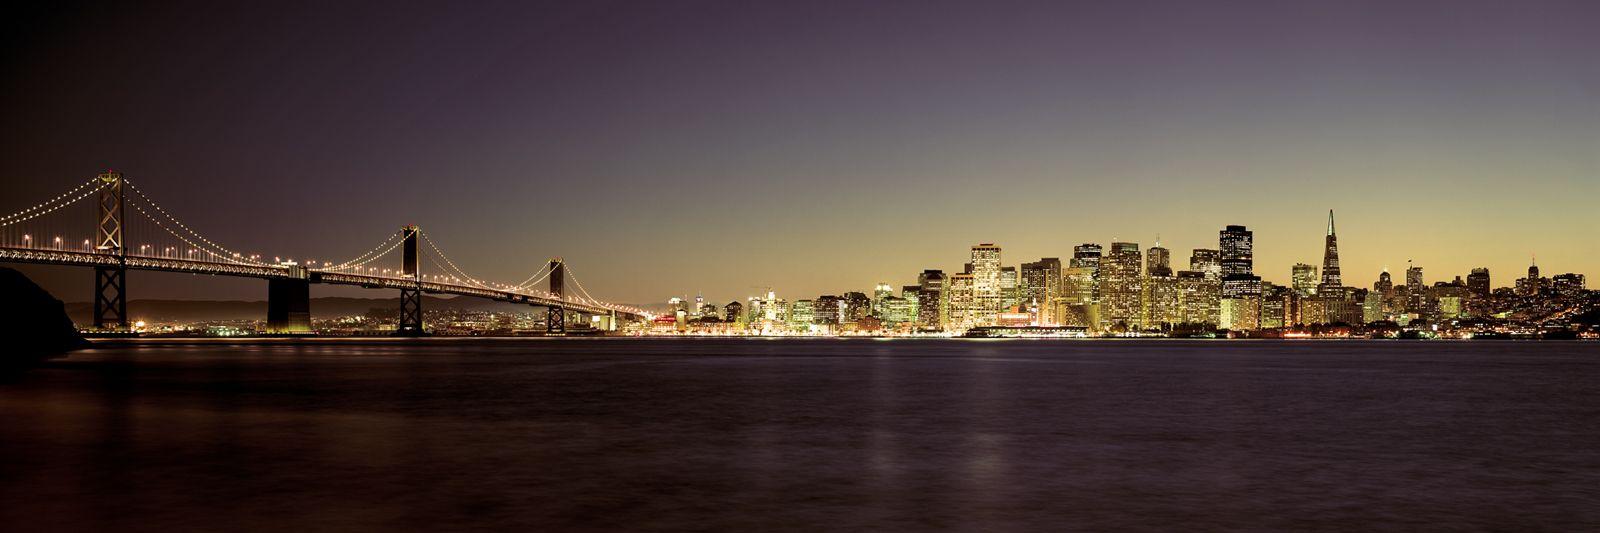 San Francisco Bay Bridge Night Skyline Wallpaper. San Francisco